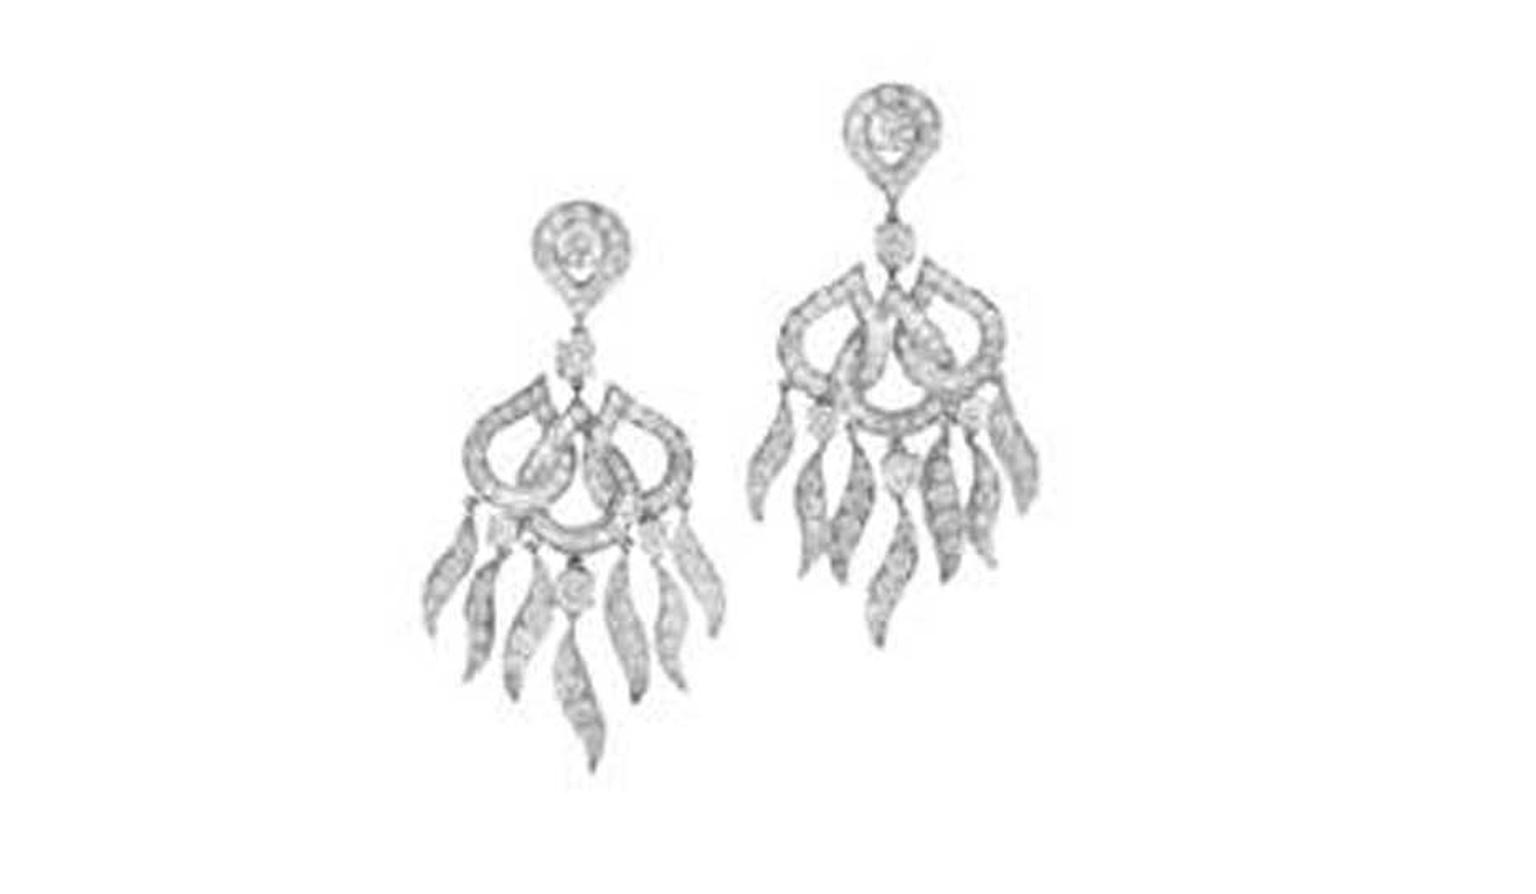 Beautiful Bulgari earrings with round brilliant cut diamonds worn by Naomi Watts to the Screen Actors Guiild Awards 2015.